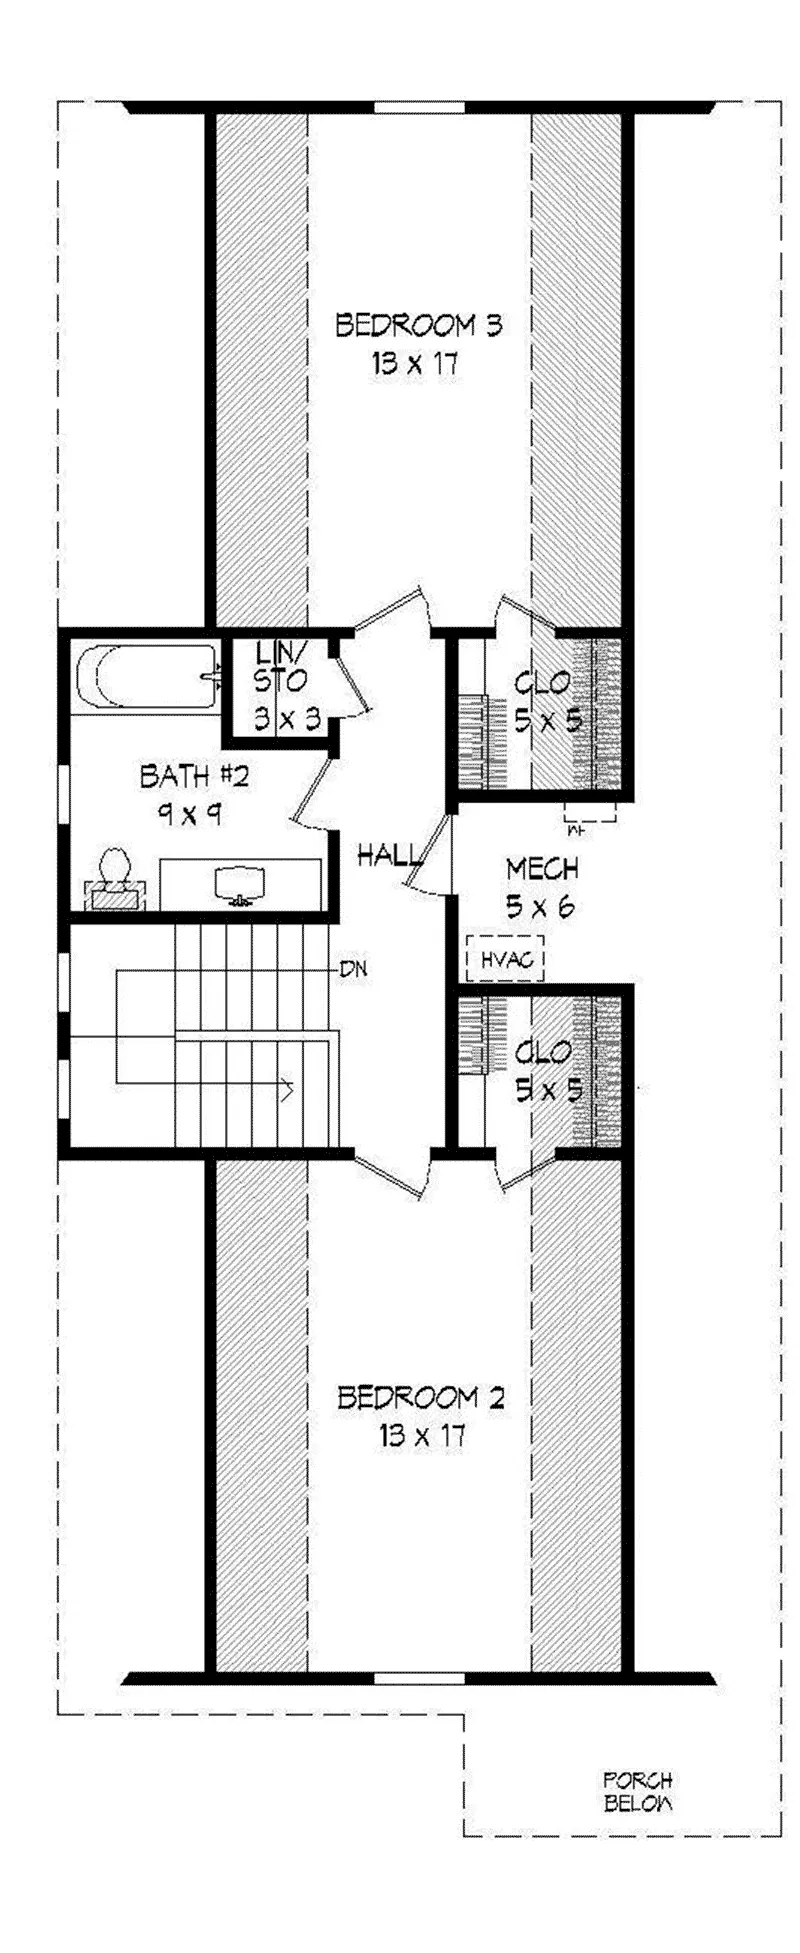 Tudor House Plan Second Floor - Sunnen Craftsman Home 141D-0017 - Shop House Plans and More